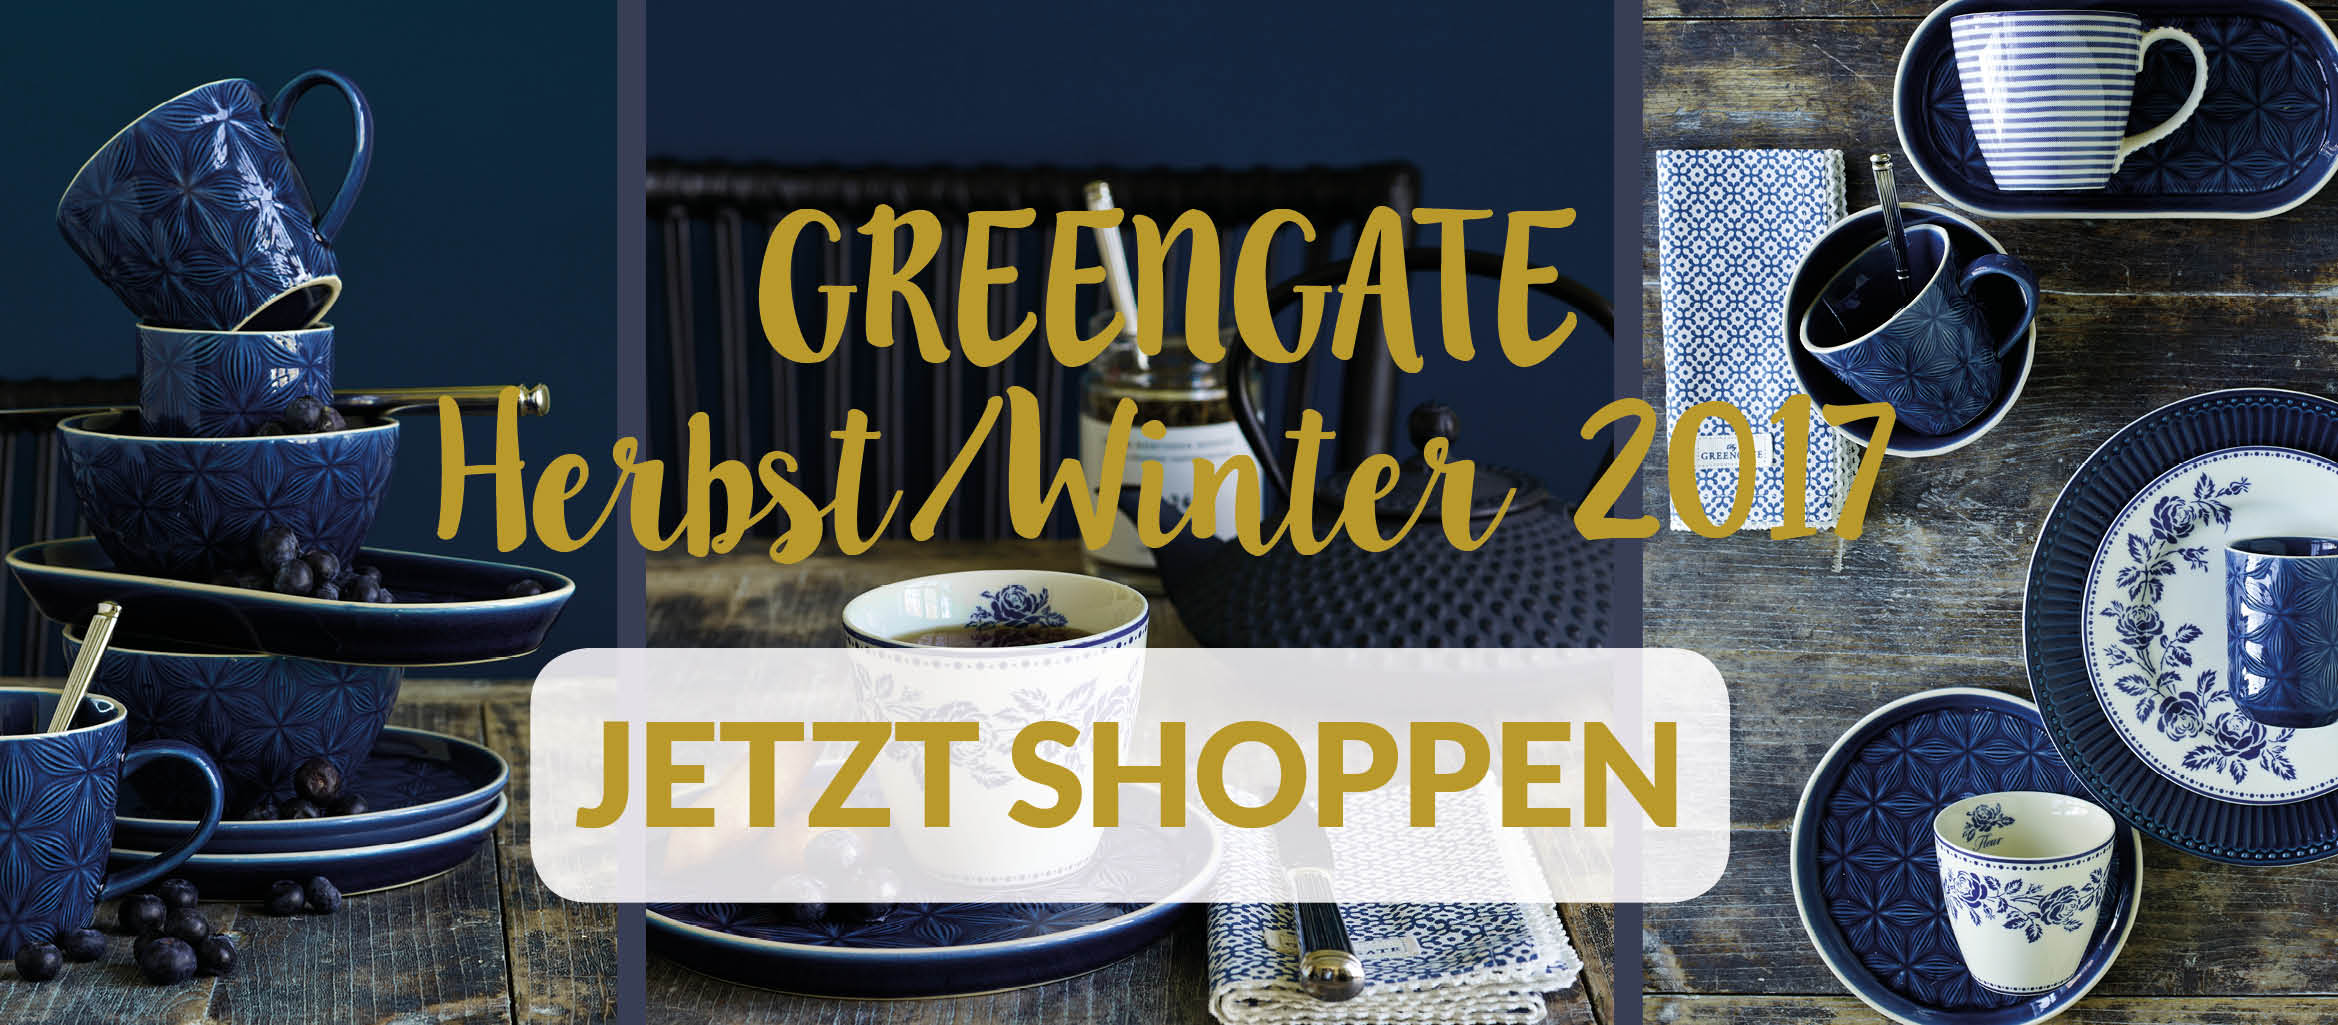 Greengate Herbst/Winter-Kollektion 2017: jetzt shoppen